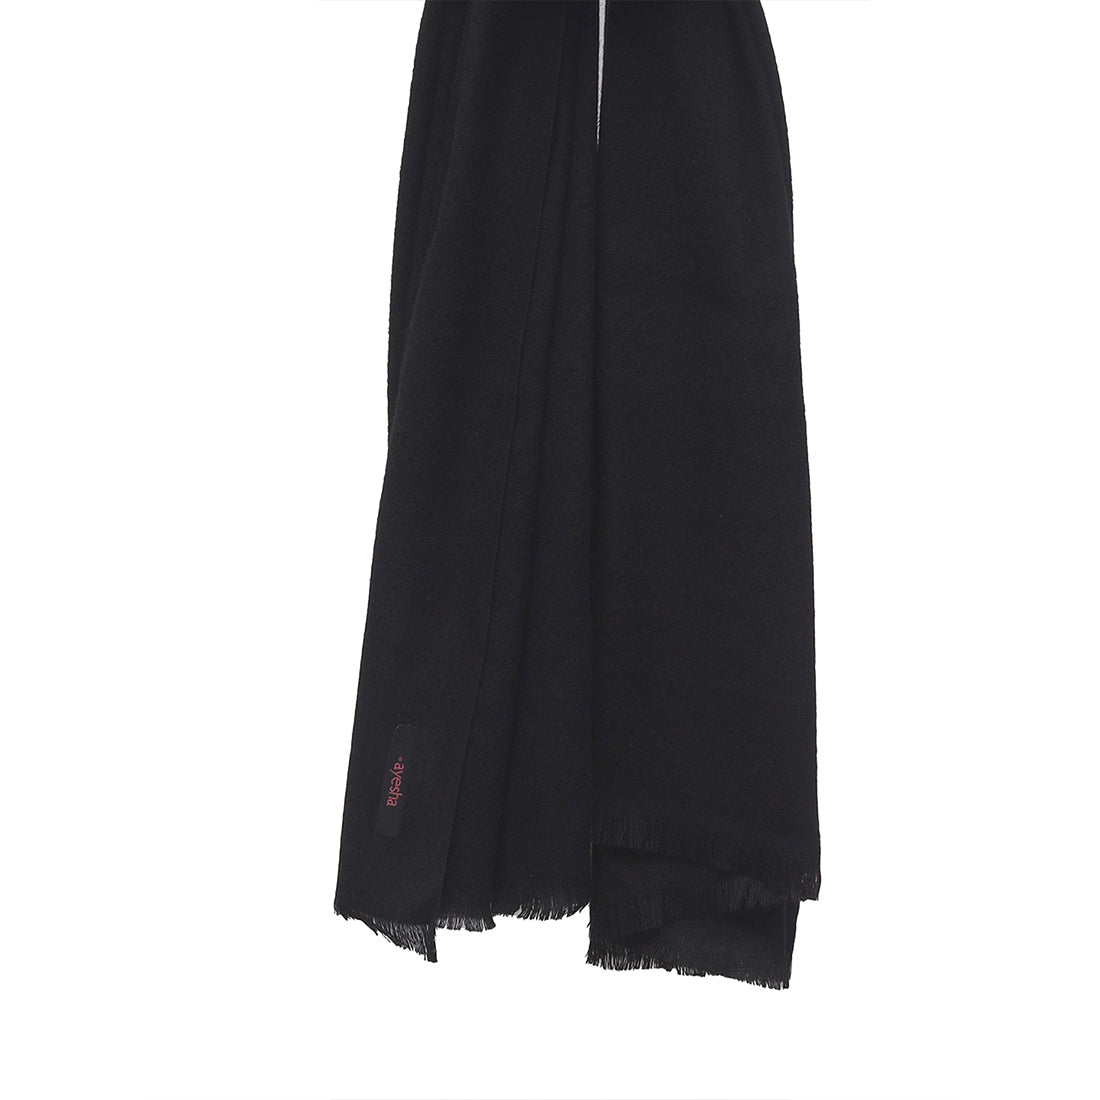 Ayesha Luxuriously soft black acrylic shawl, perfect for any occasion.